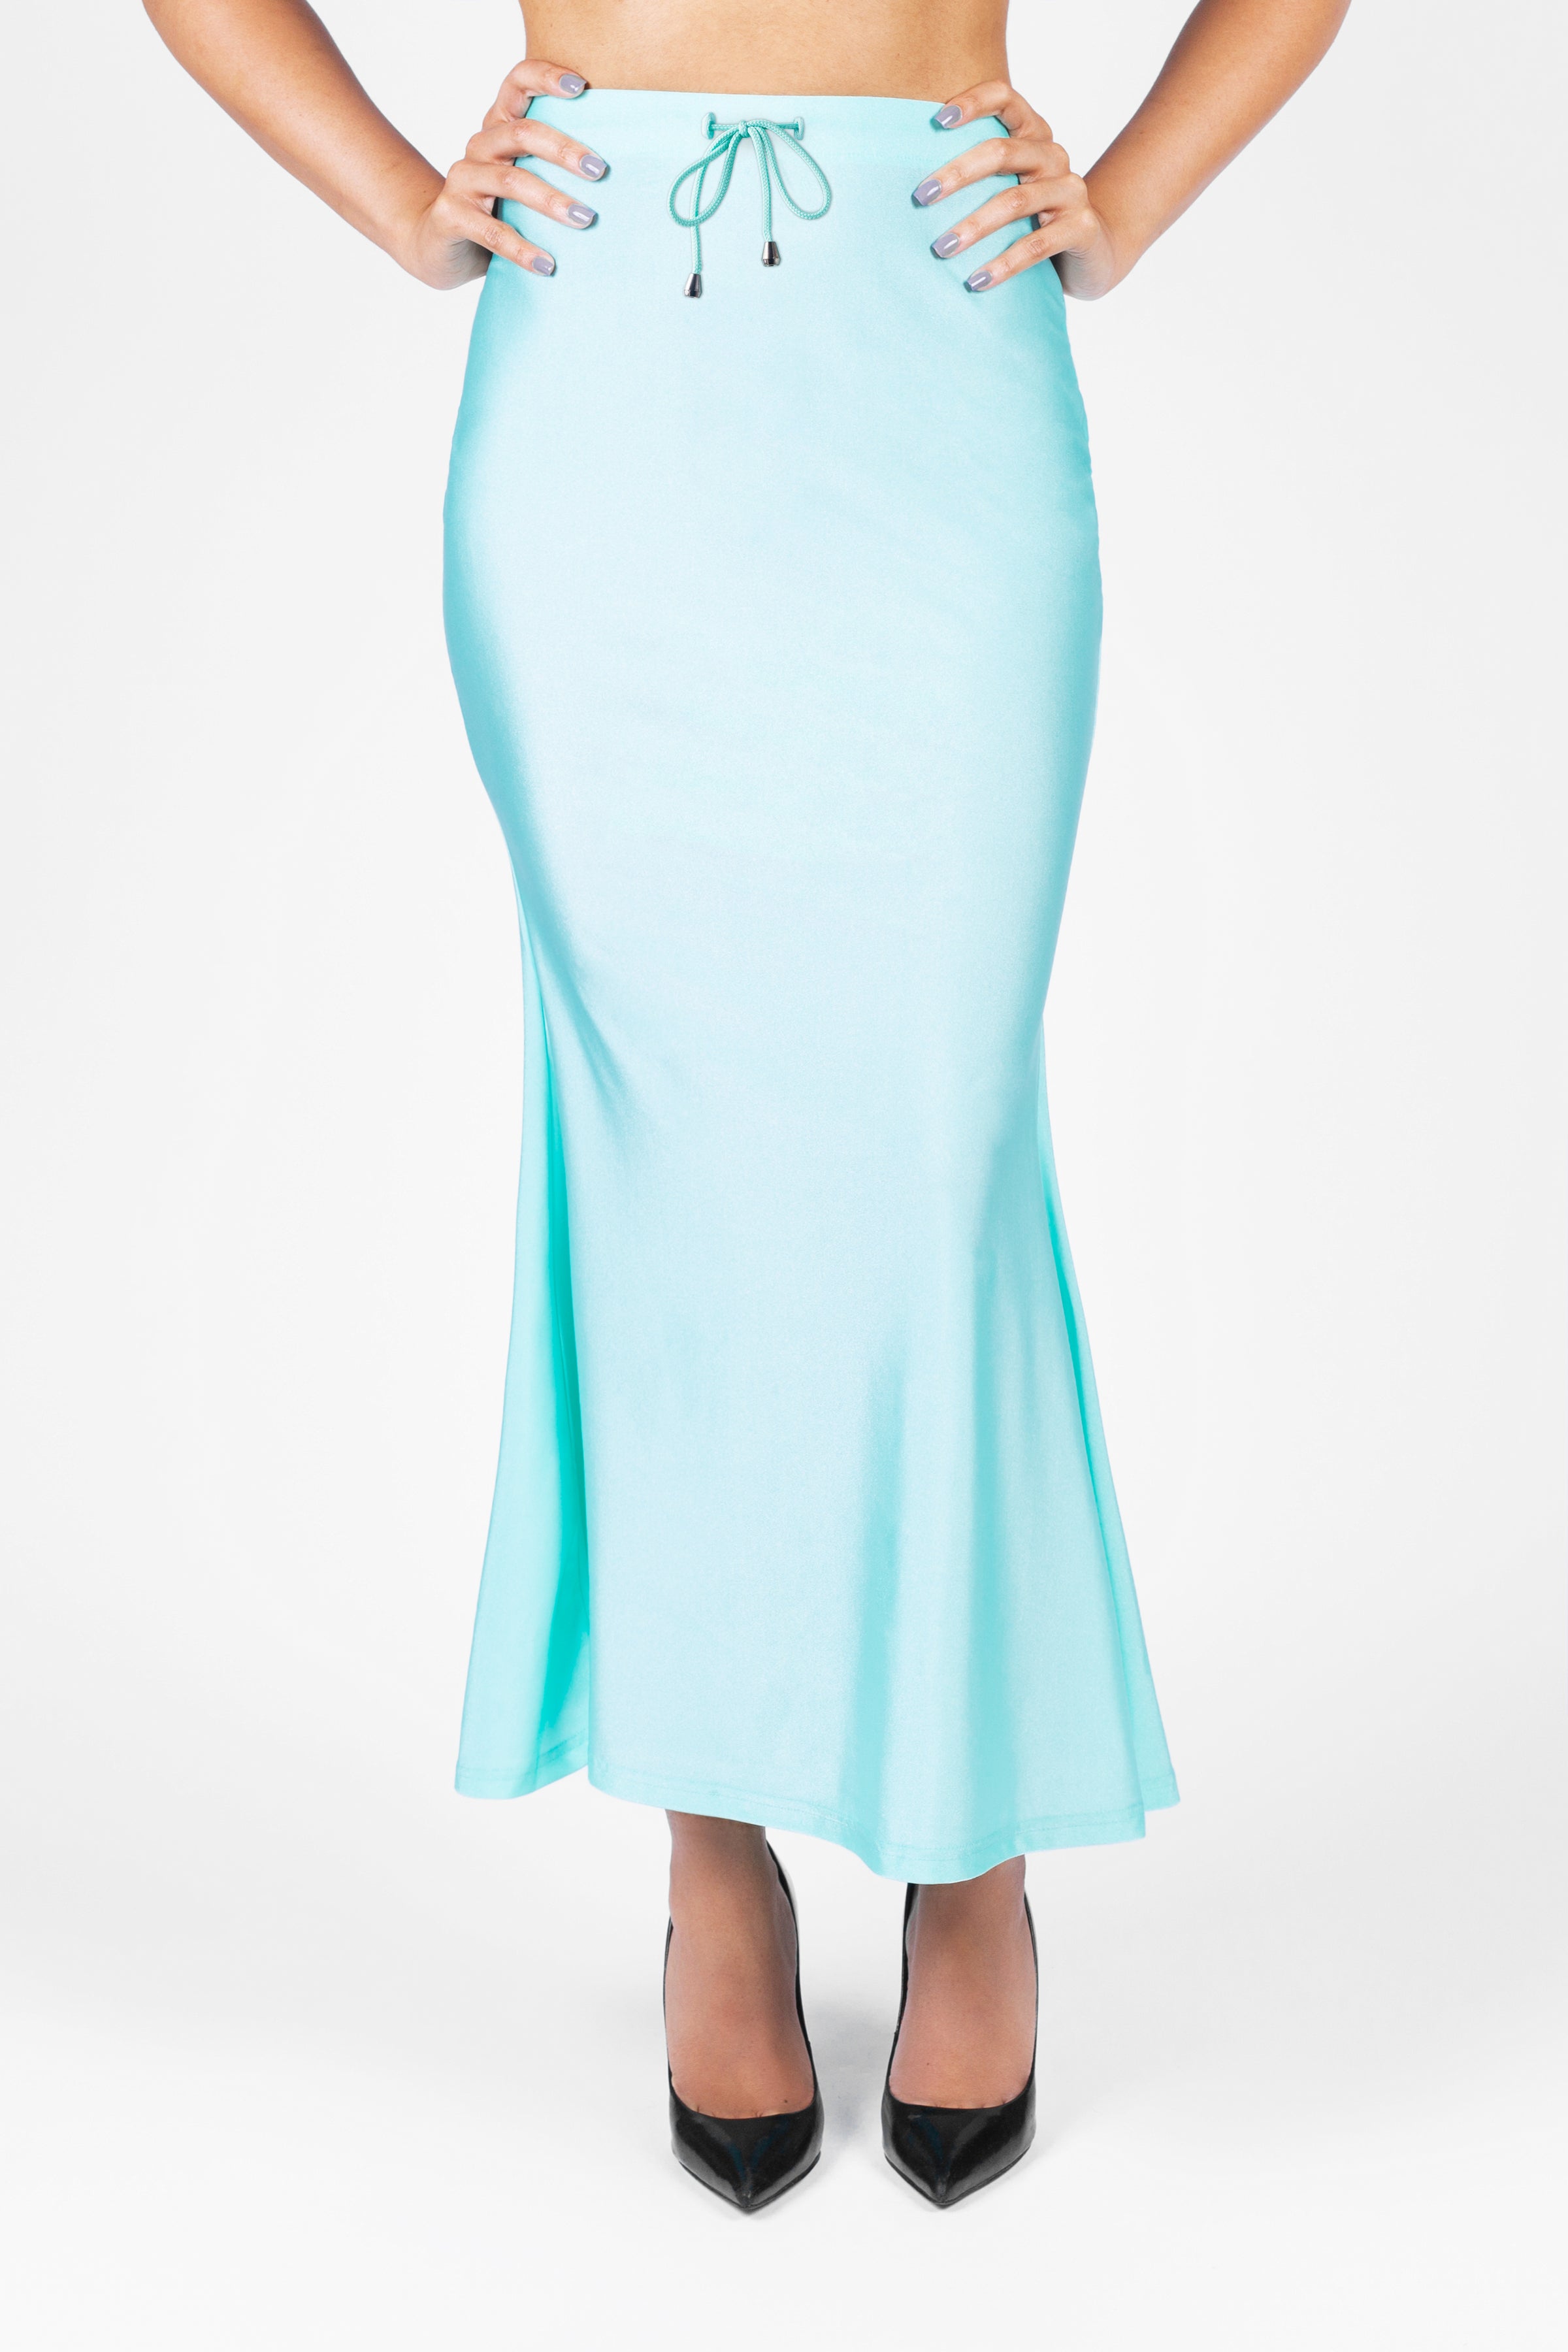 eloria Light Blue Soft Comfy Pleated Saree Silhouette Saree